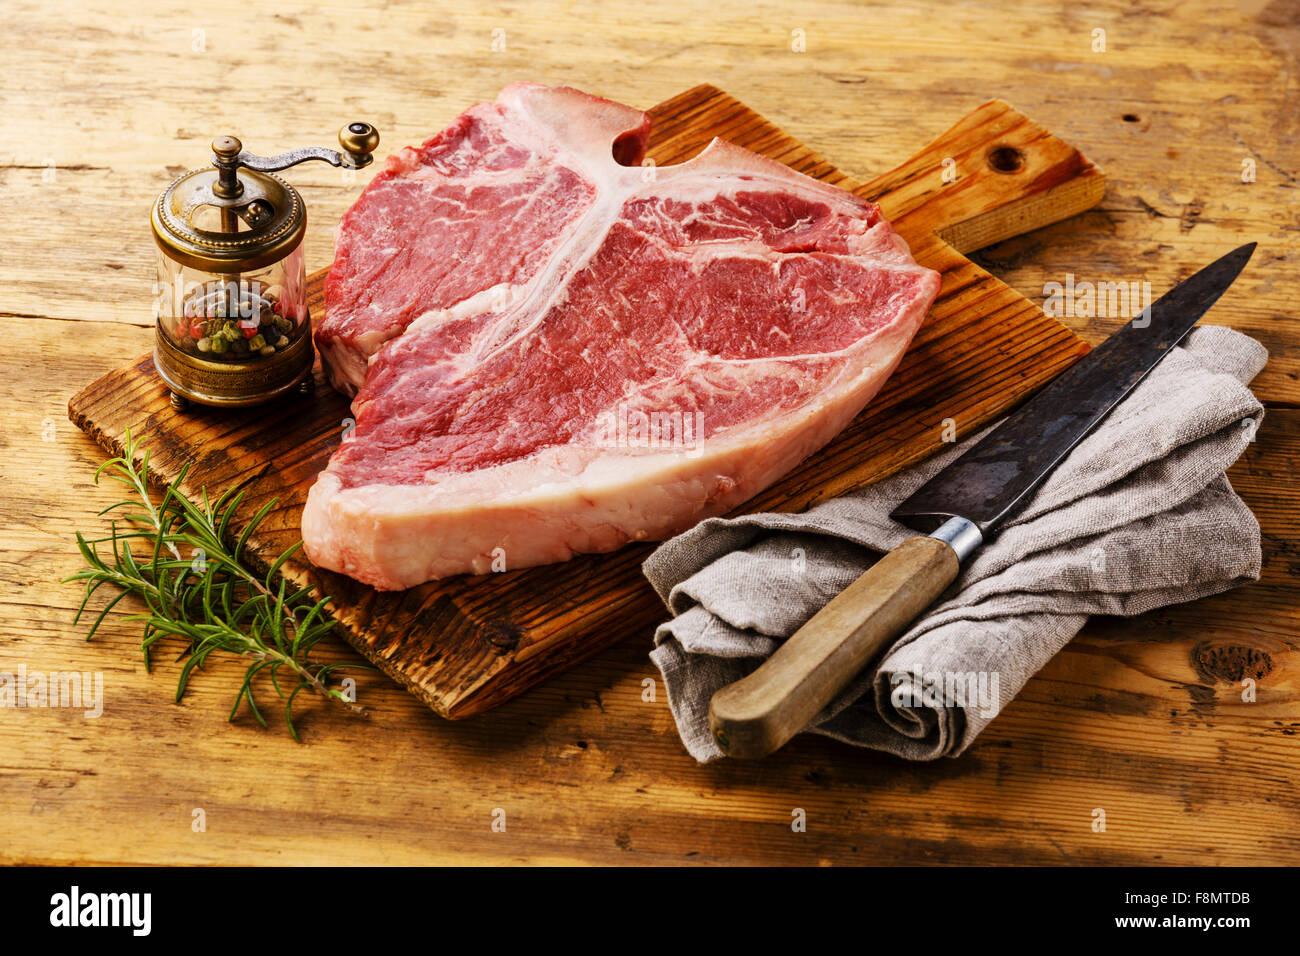 Raw fresh meat T-bone steak and seasoning on wooden background Stock Photo